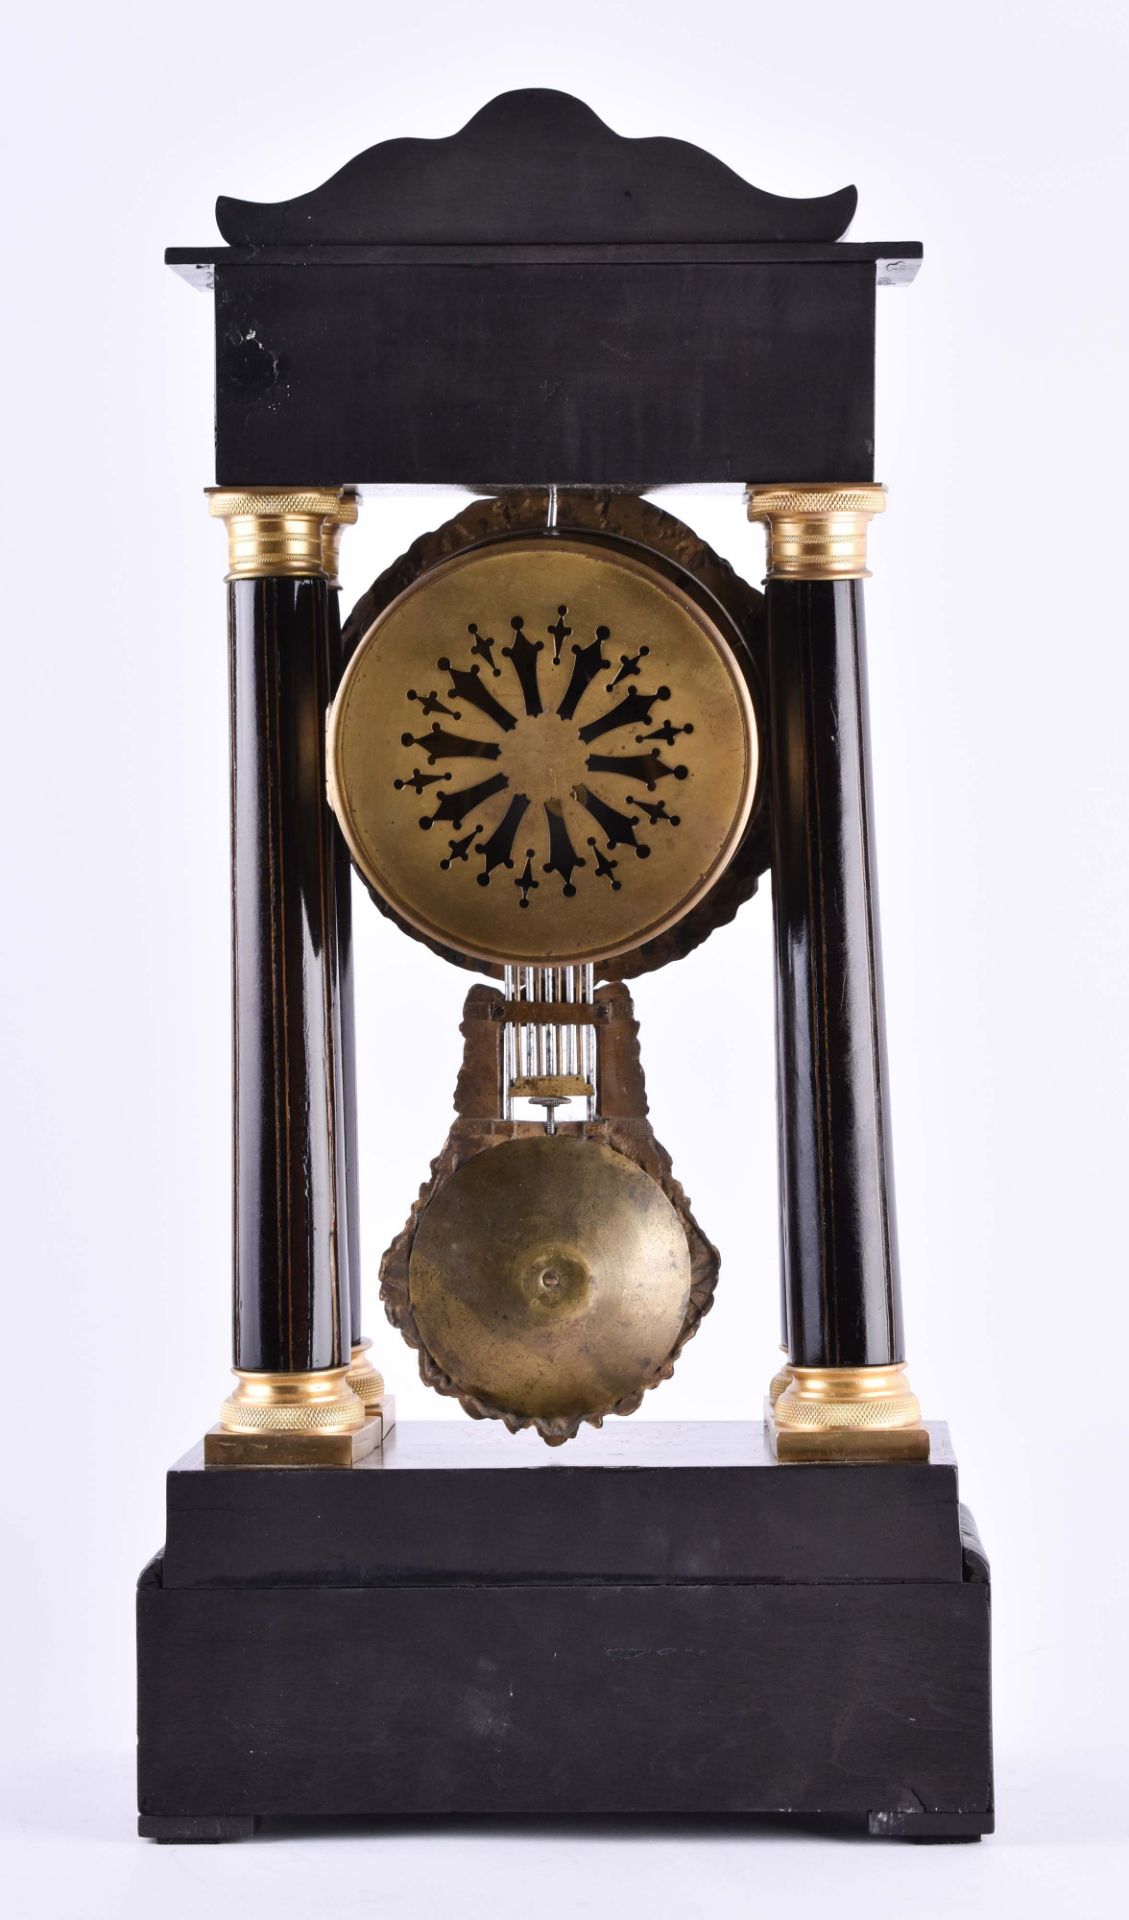 Portal clock France Napoleon III 19th century - Image 6 of 6